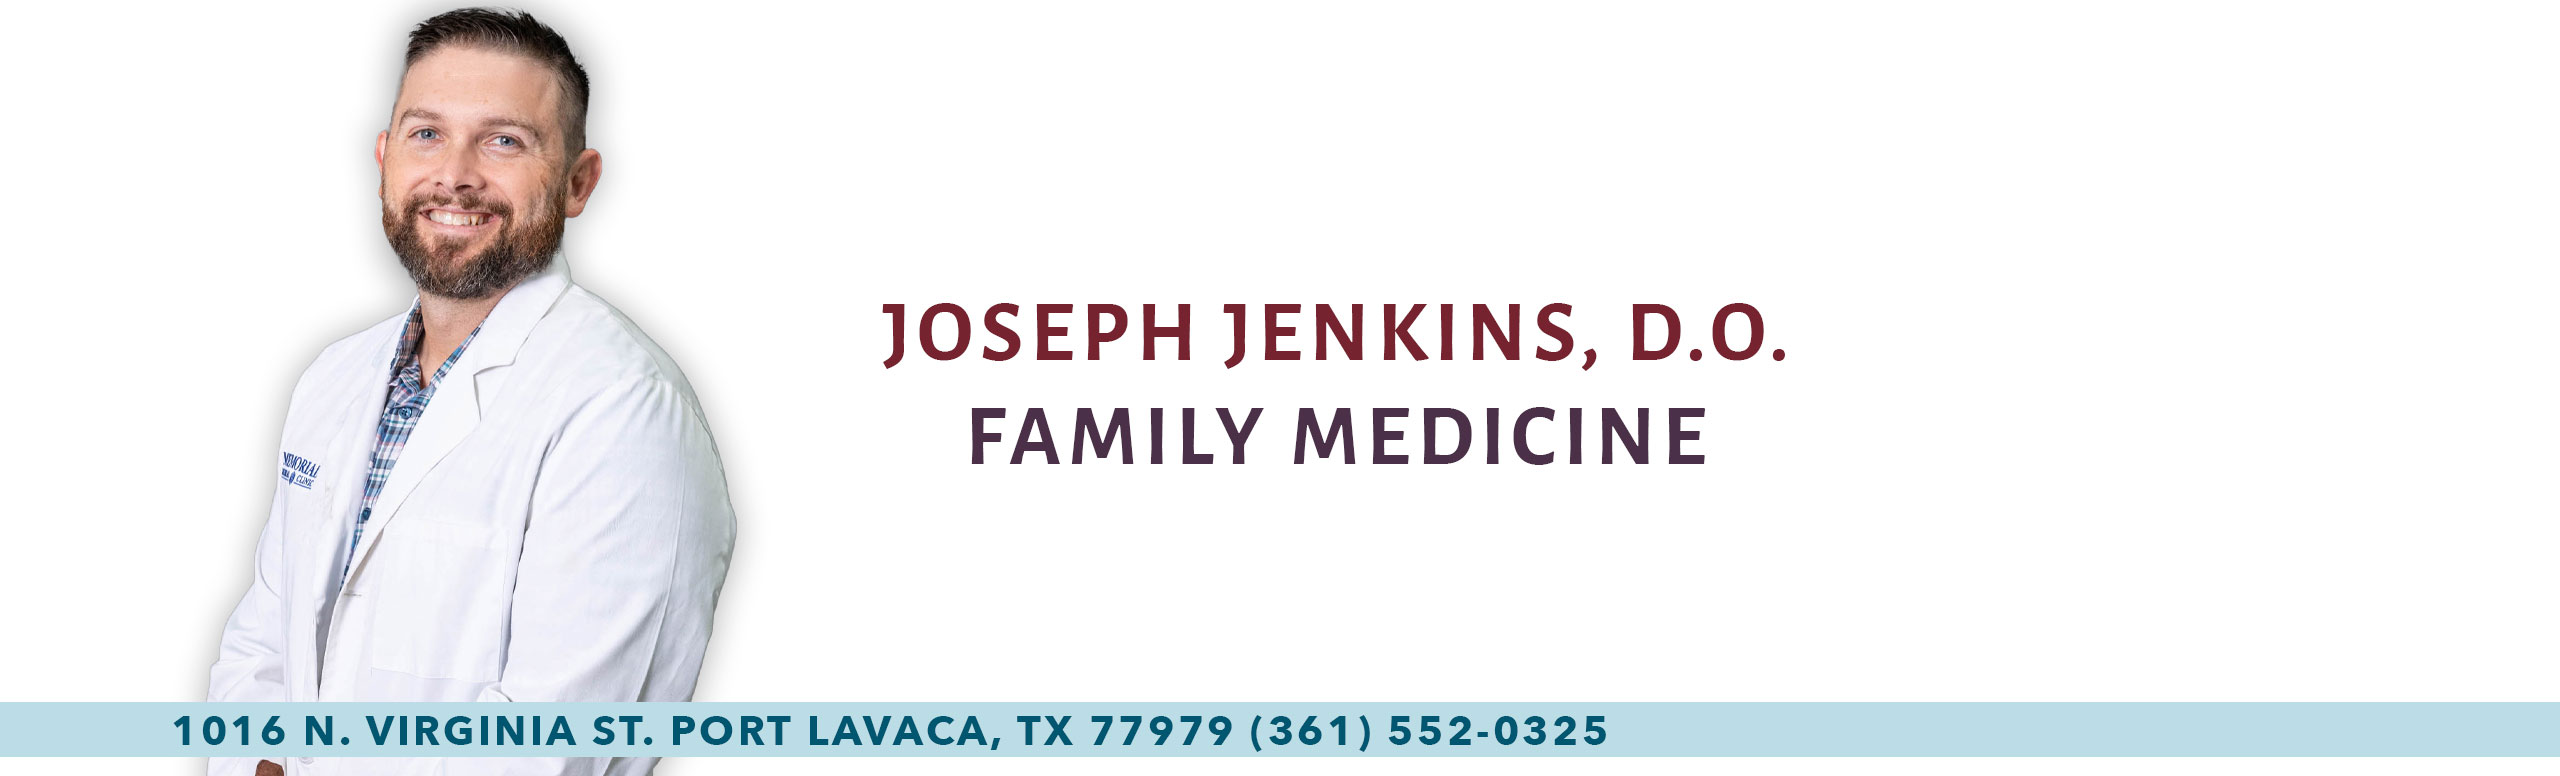 Banner Picture of Joseph Jenkins, DO
Family Medicine

1016 N. VIRGINA ST. PORT LAVACA, TX 77979 (361) 552-0325